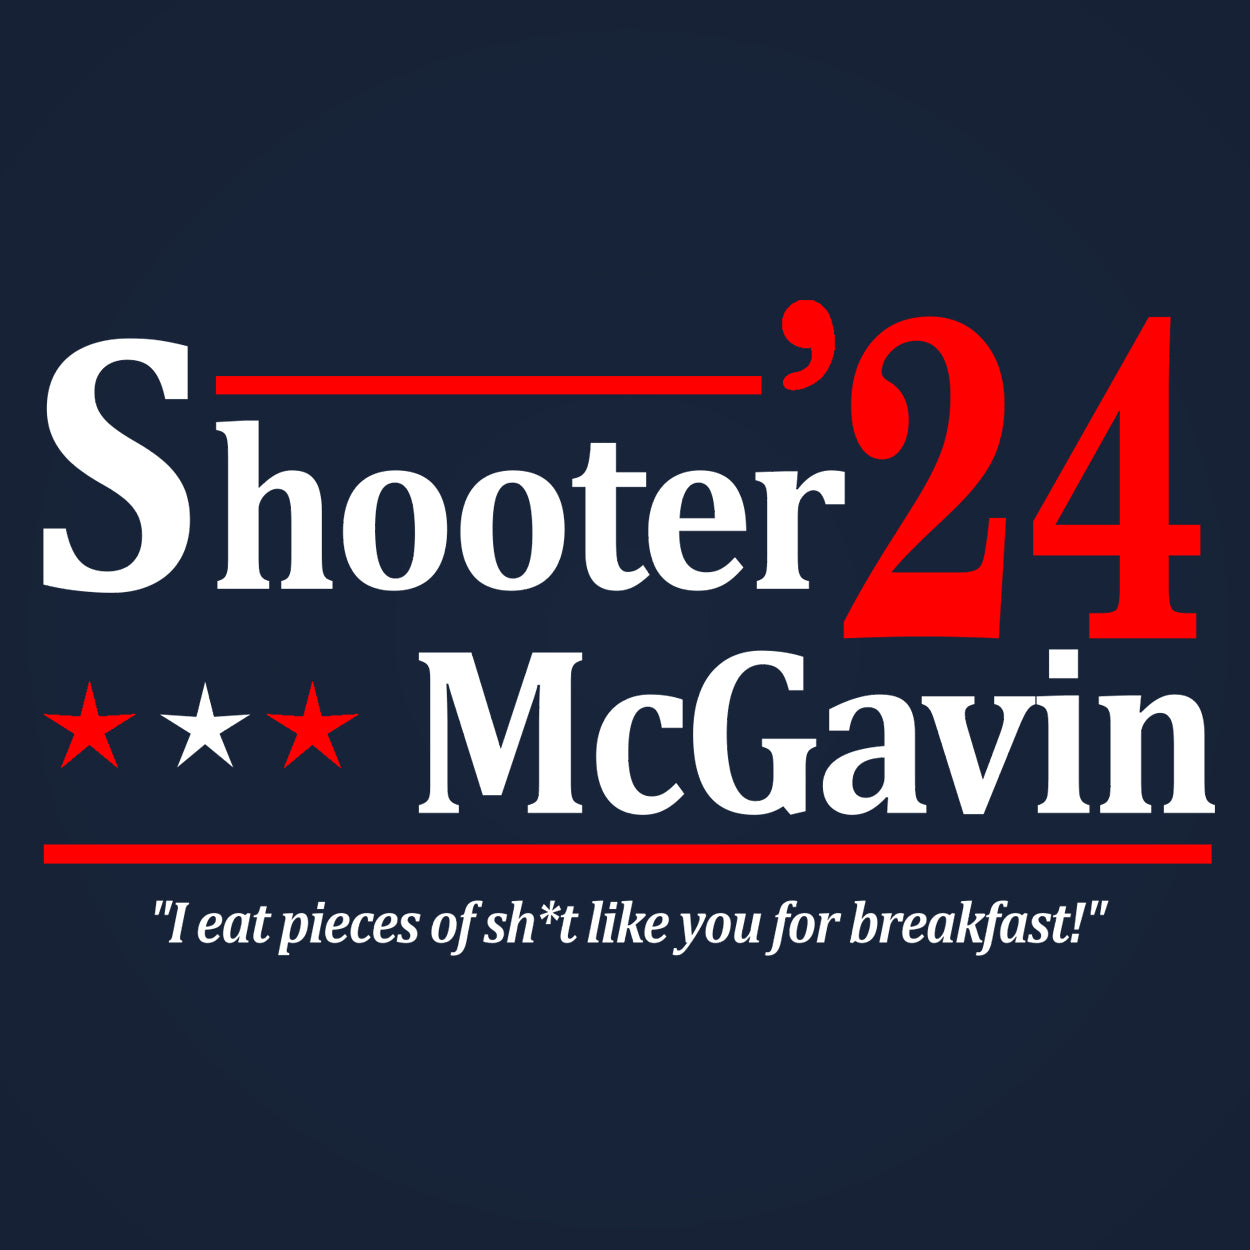 Shooter McGavin 2024 Election Tshirt - Donkey Tees